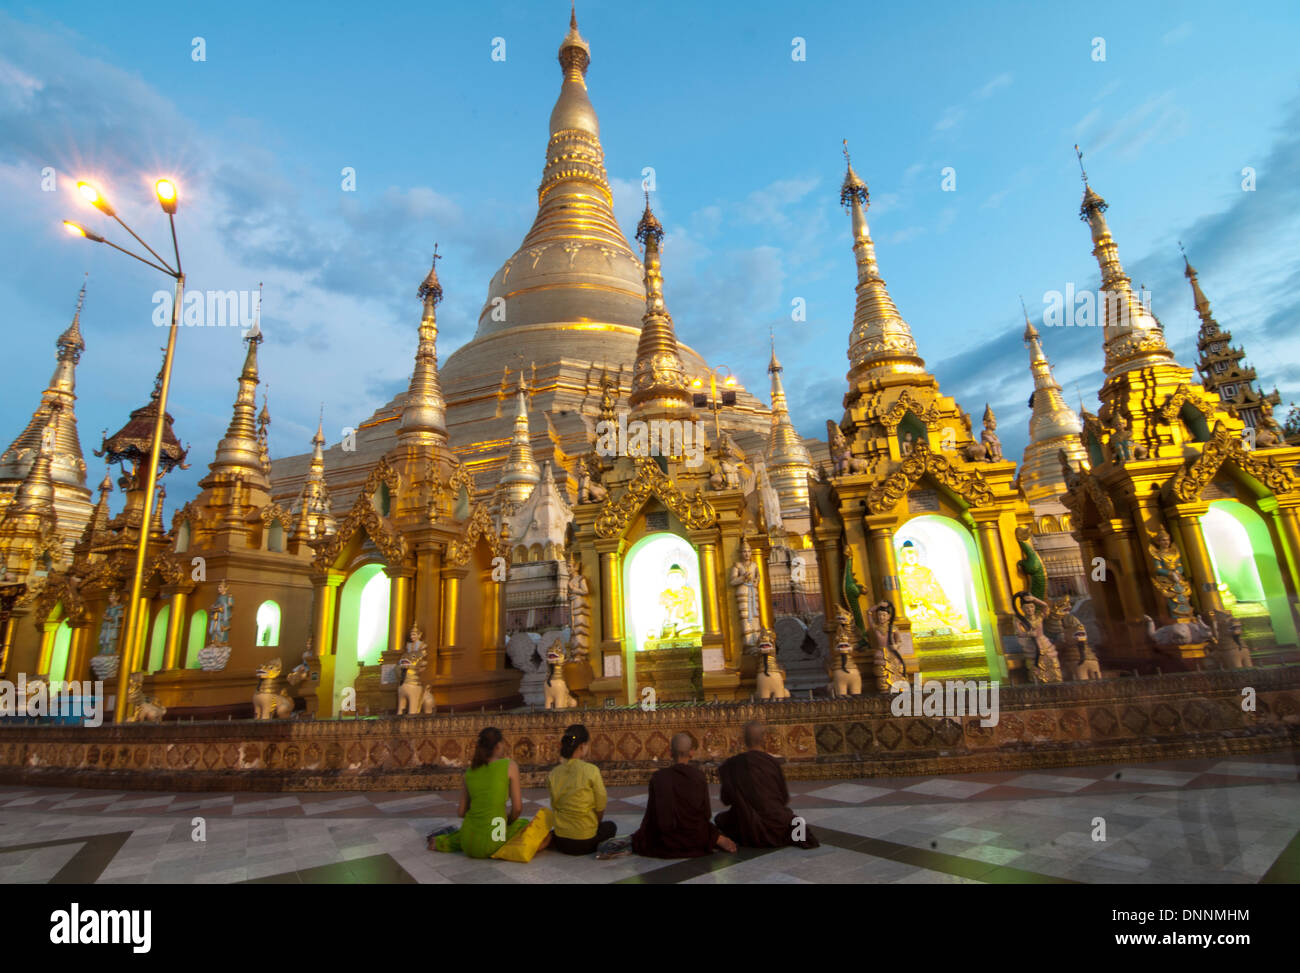 Early evening prayers at the Shwedagon pagoda in Yangon. Stock Photo